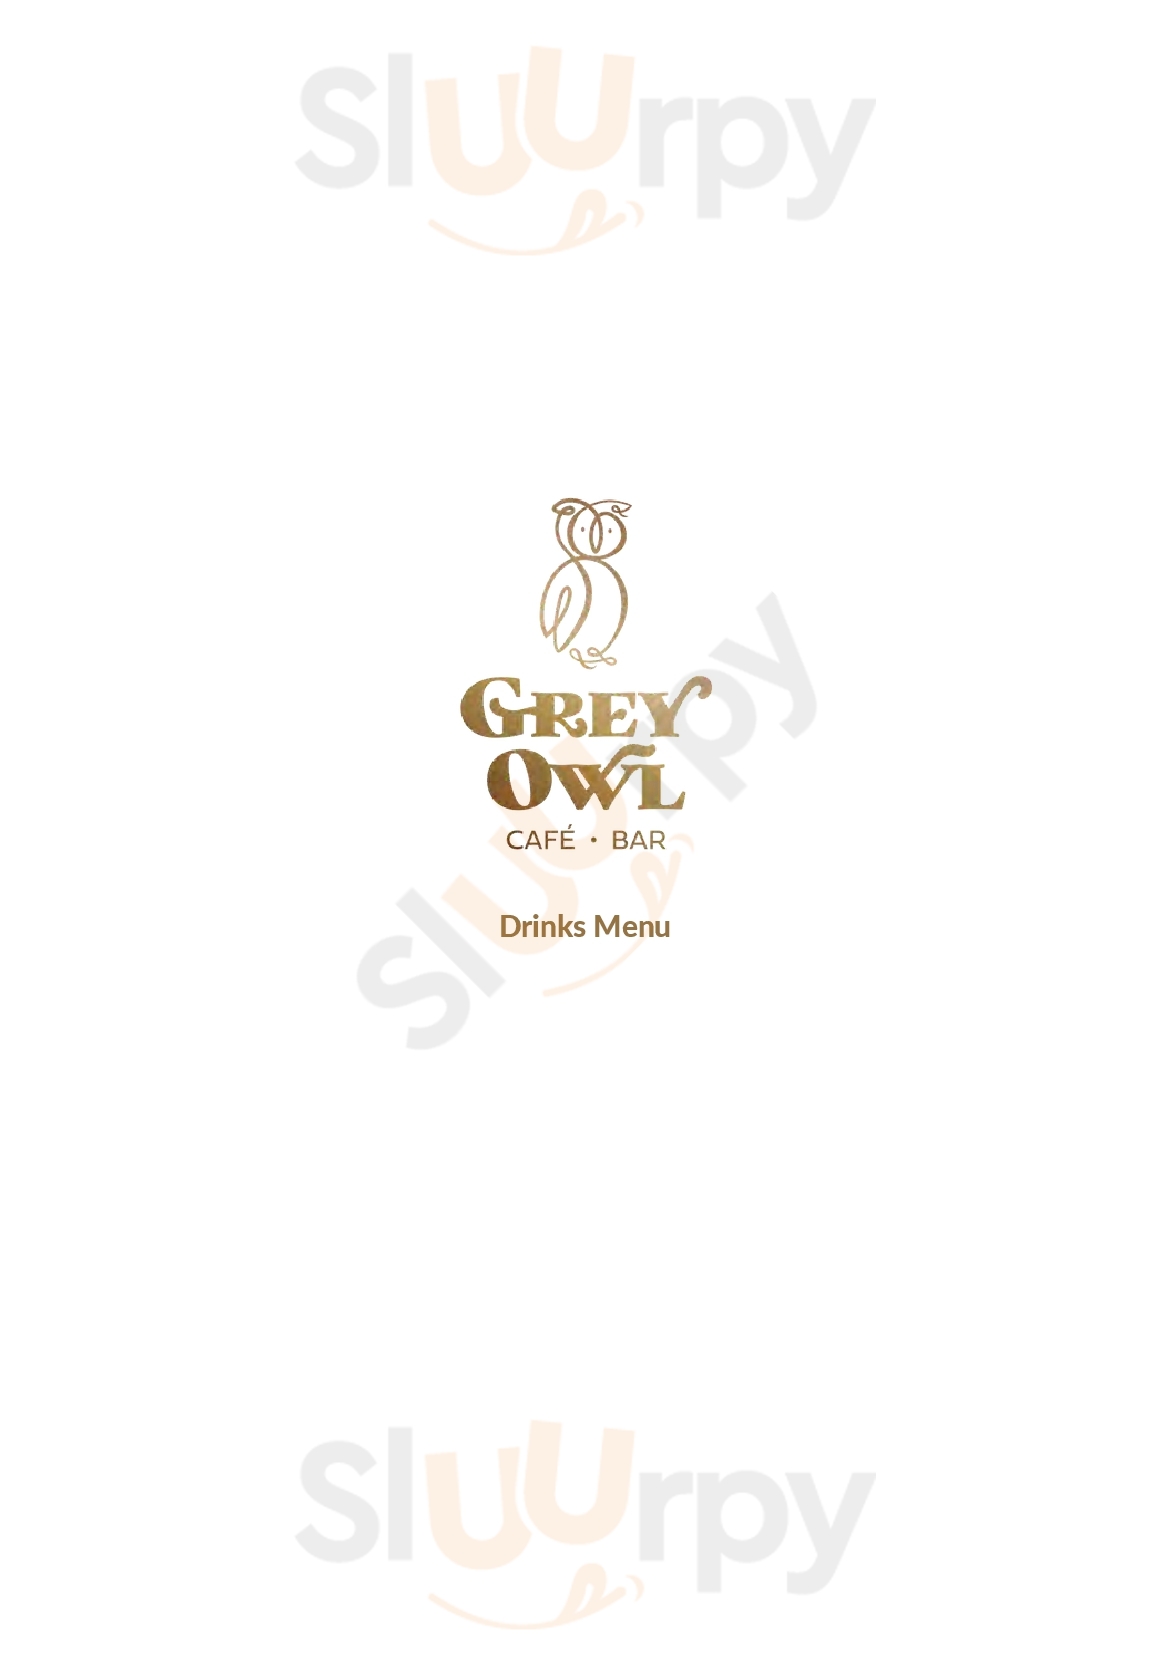 Grey Owl Newcastle upon Tyne Menu - 1